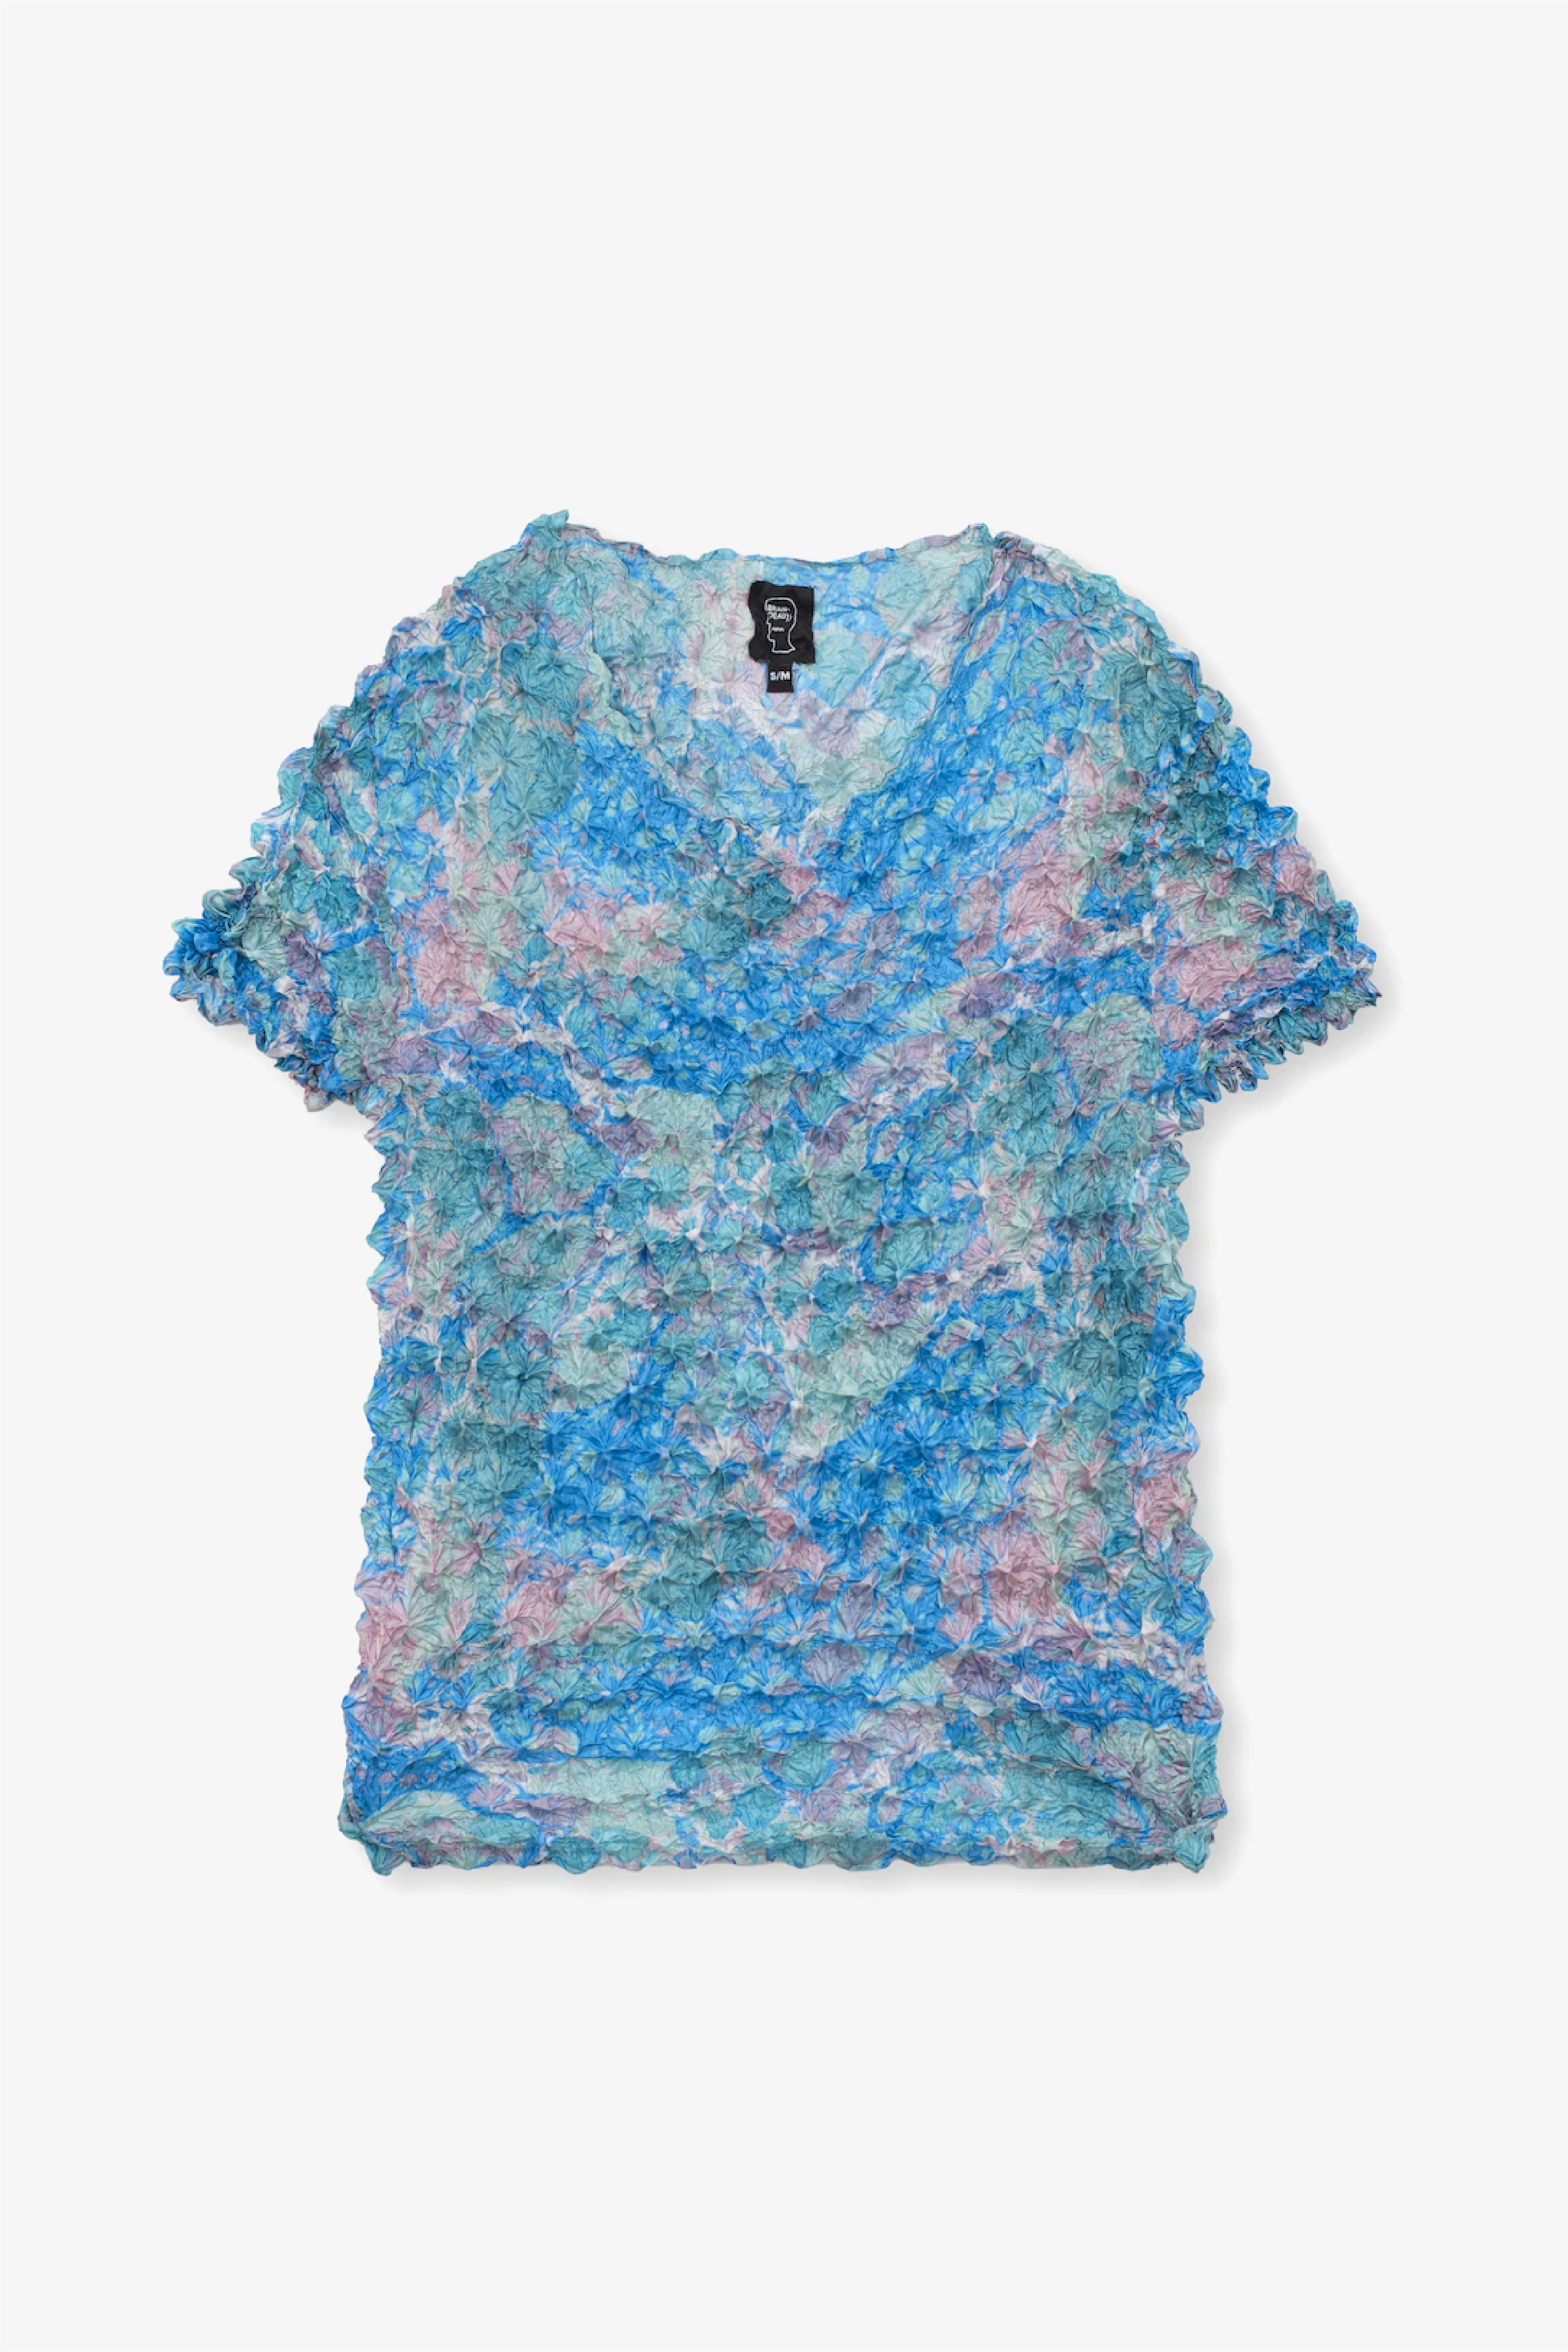 Selectshop FRAME - BRAIN DEAD Marble Bubble Shrink Shirt T-Shirts Dubai